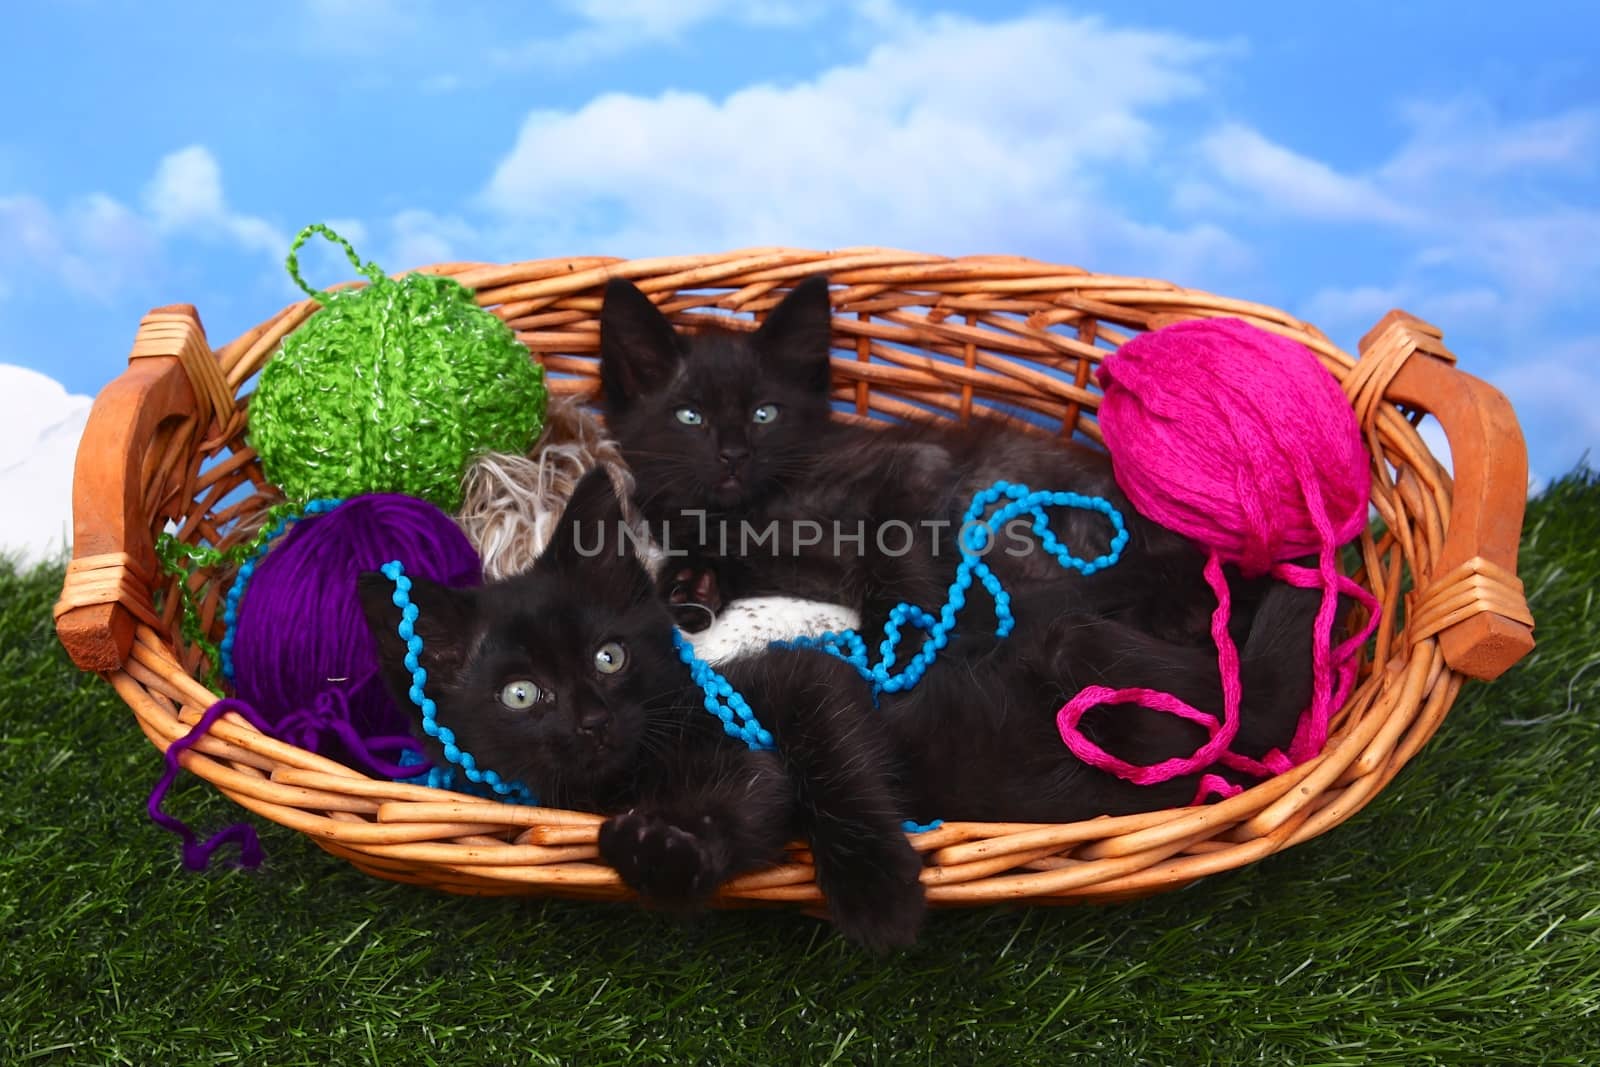 Loving Playful Kittens in a Basket of Yarn by tobkatrina